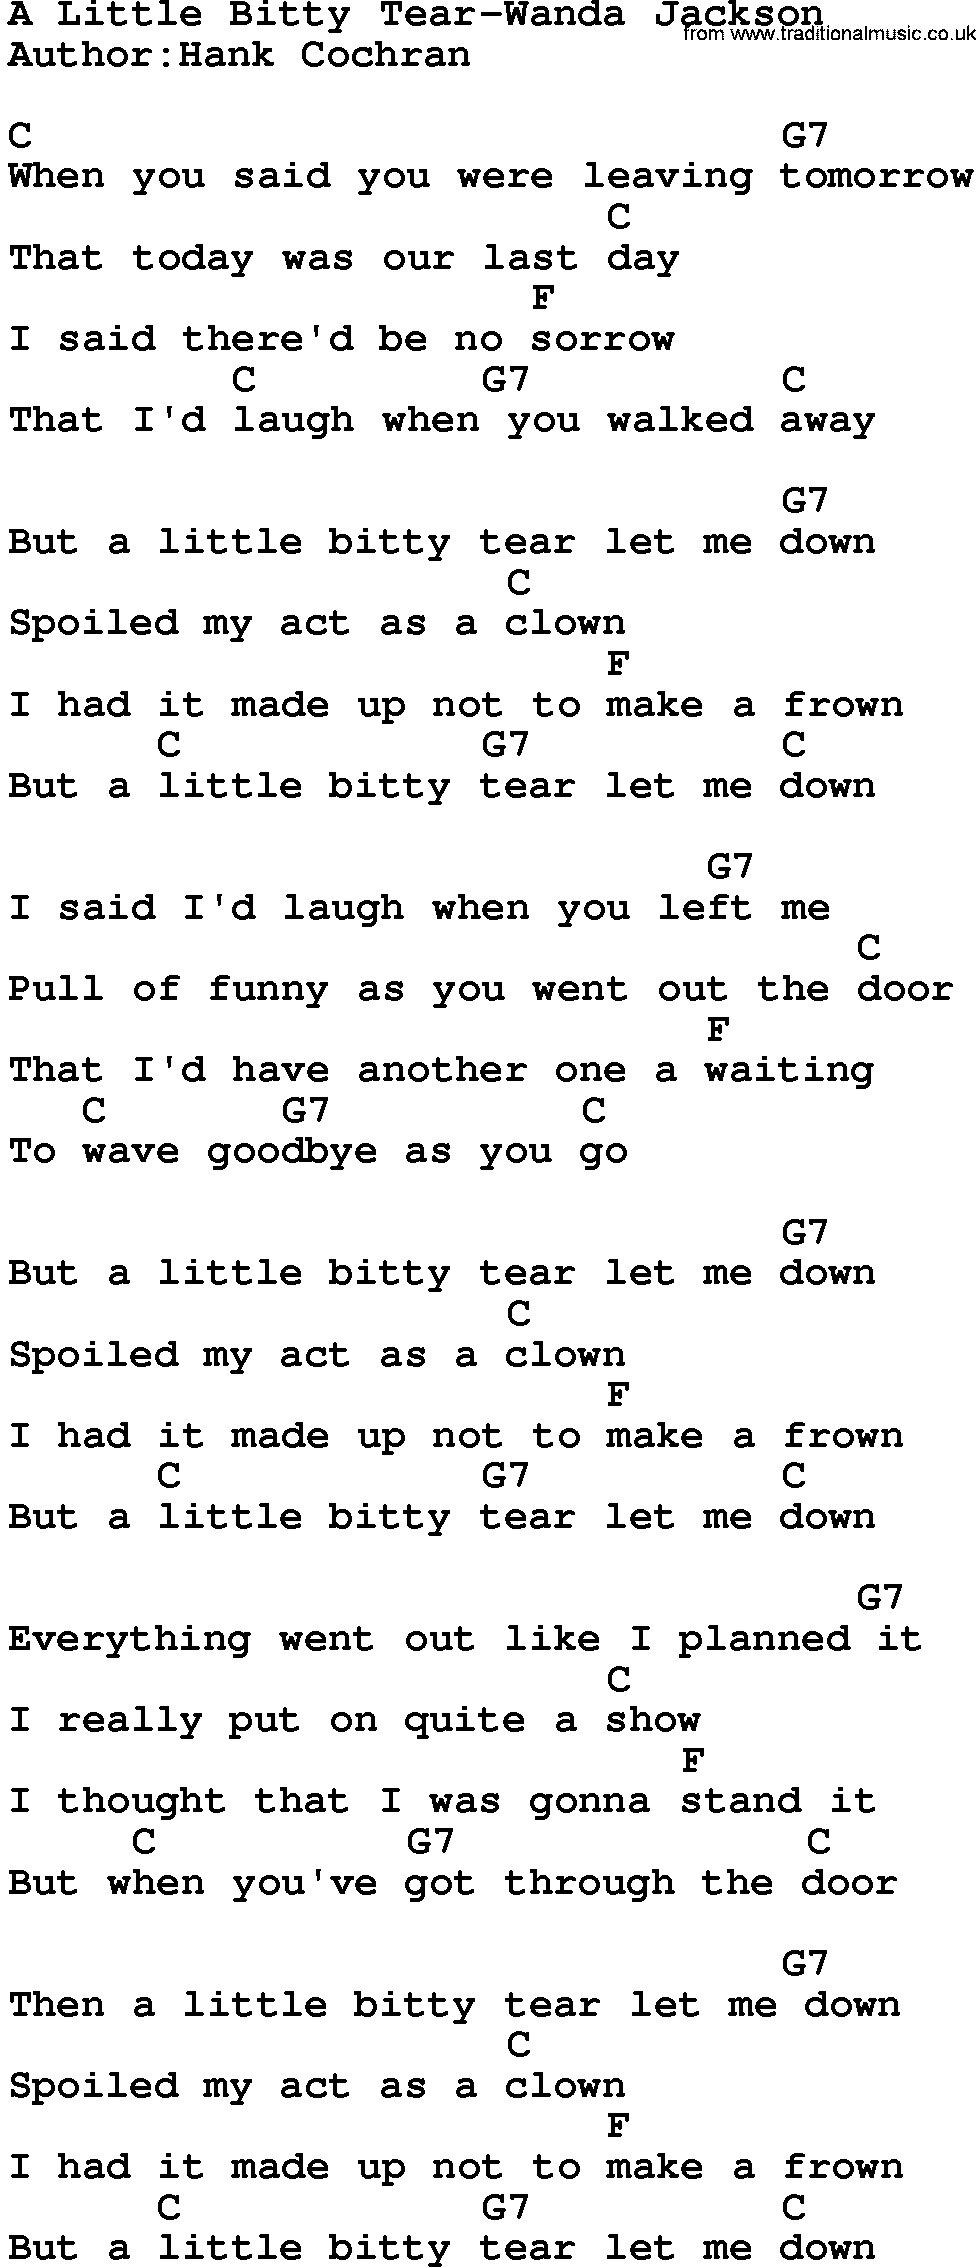 Country music song: A Little Bitty Tear-Wanda Jackson lyrics and chords